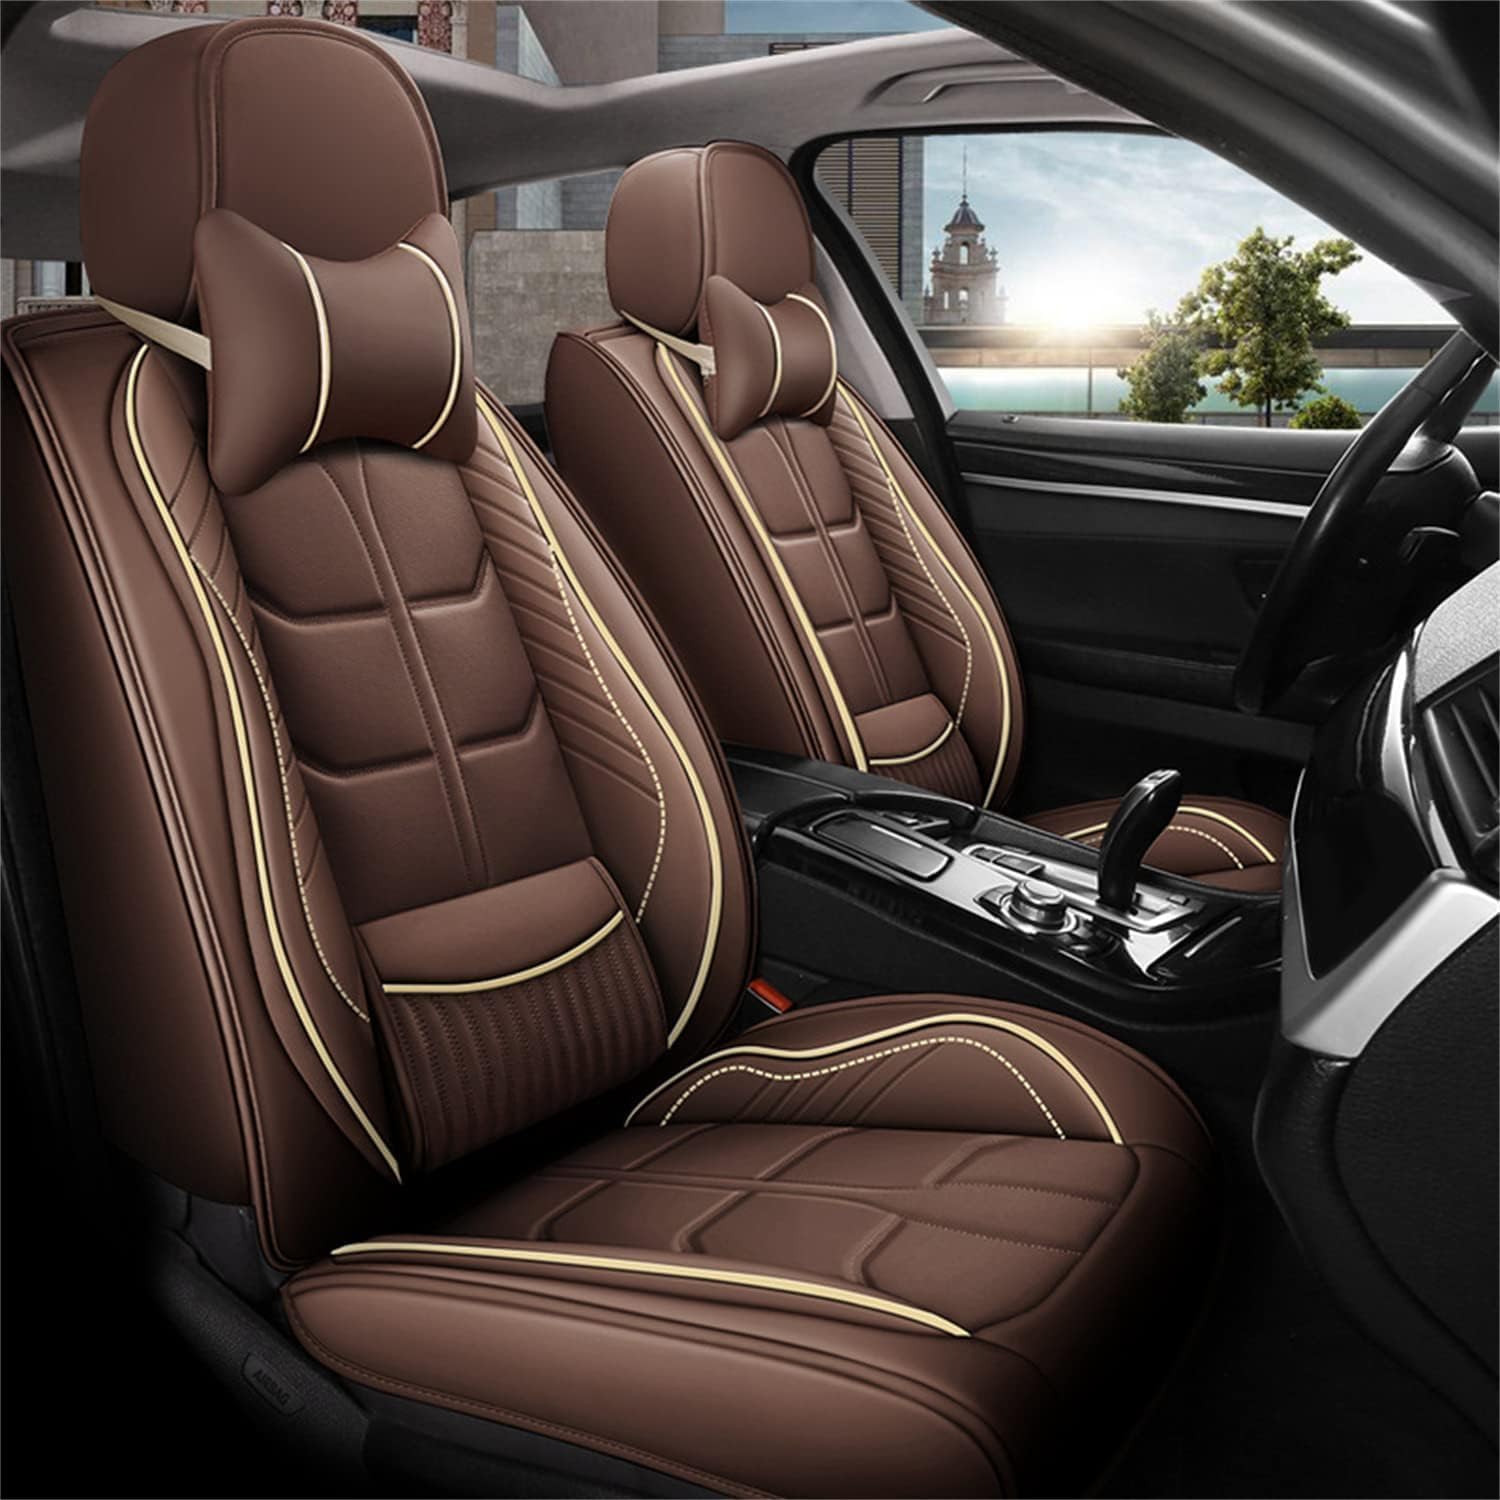 NPORT Auto PU-Leder Sitzbezüge Sets für Audi A8 Limousine D4 (5seats) LWB 2010-2017, Komfortabler Dauerhafter Sitzbezug Vordersitze Rücksitze Autositzschoner,A/Coffee-Withpillow von NPORT